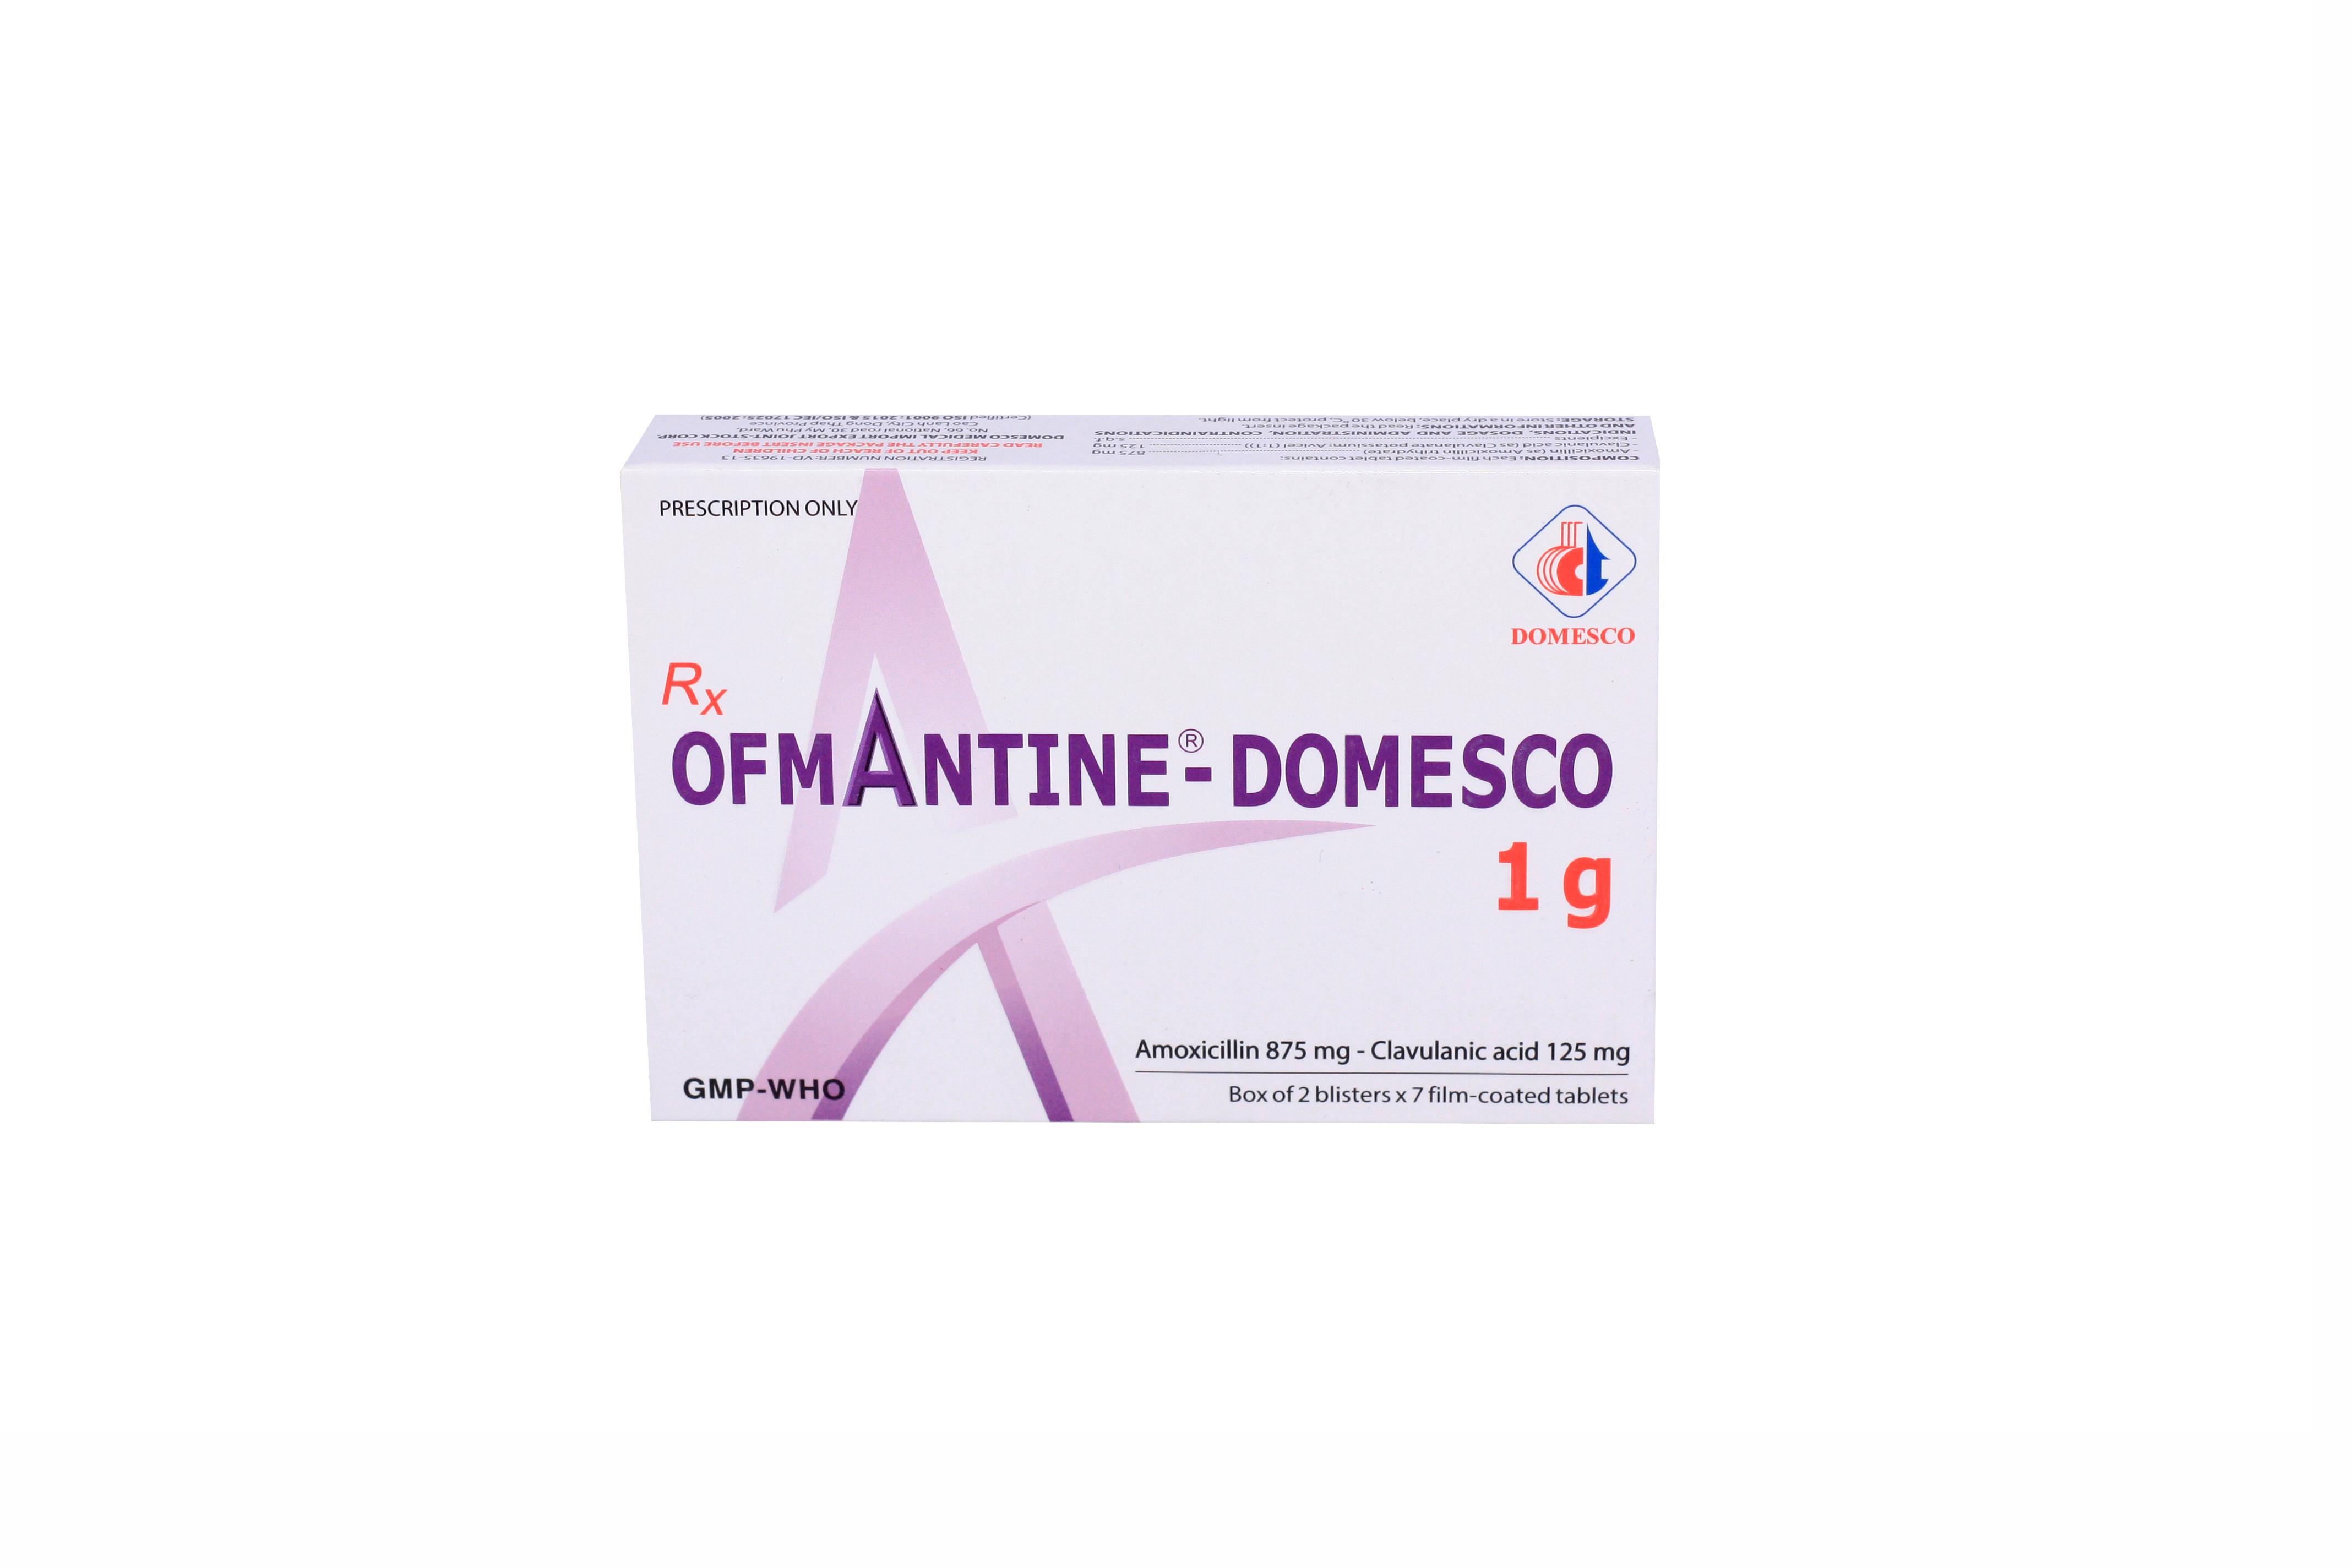 Ofmantine 1g (Amoxicillin, Acid Clavulanic) Domesco (H/14v)